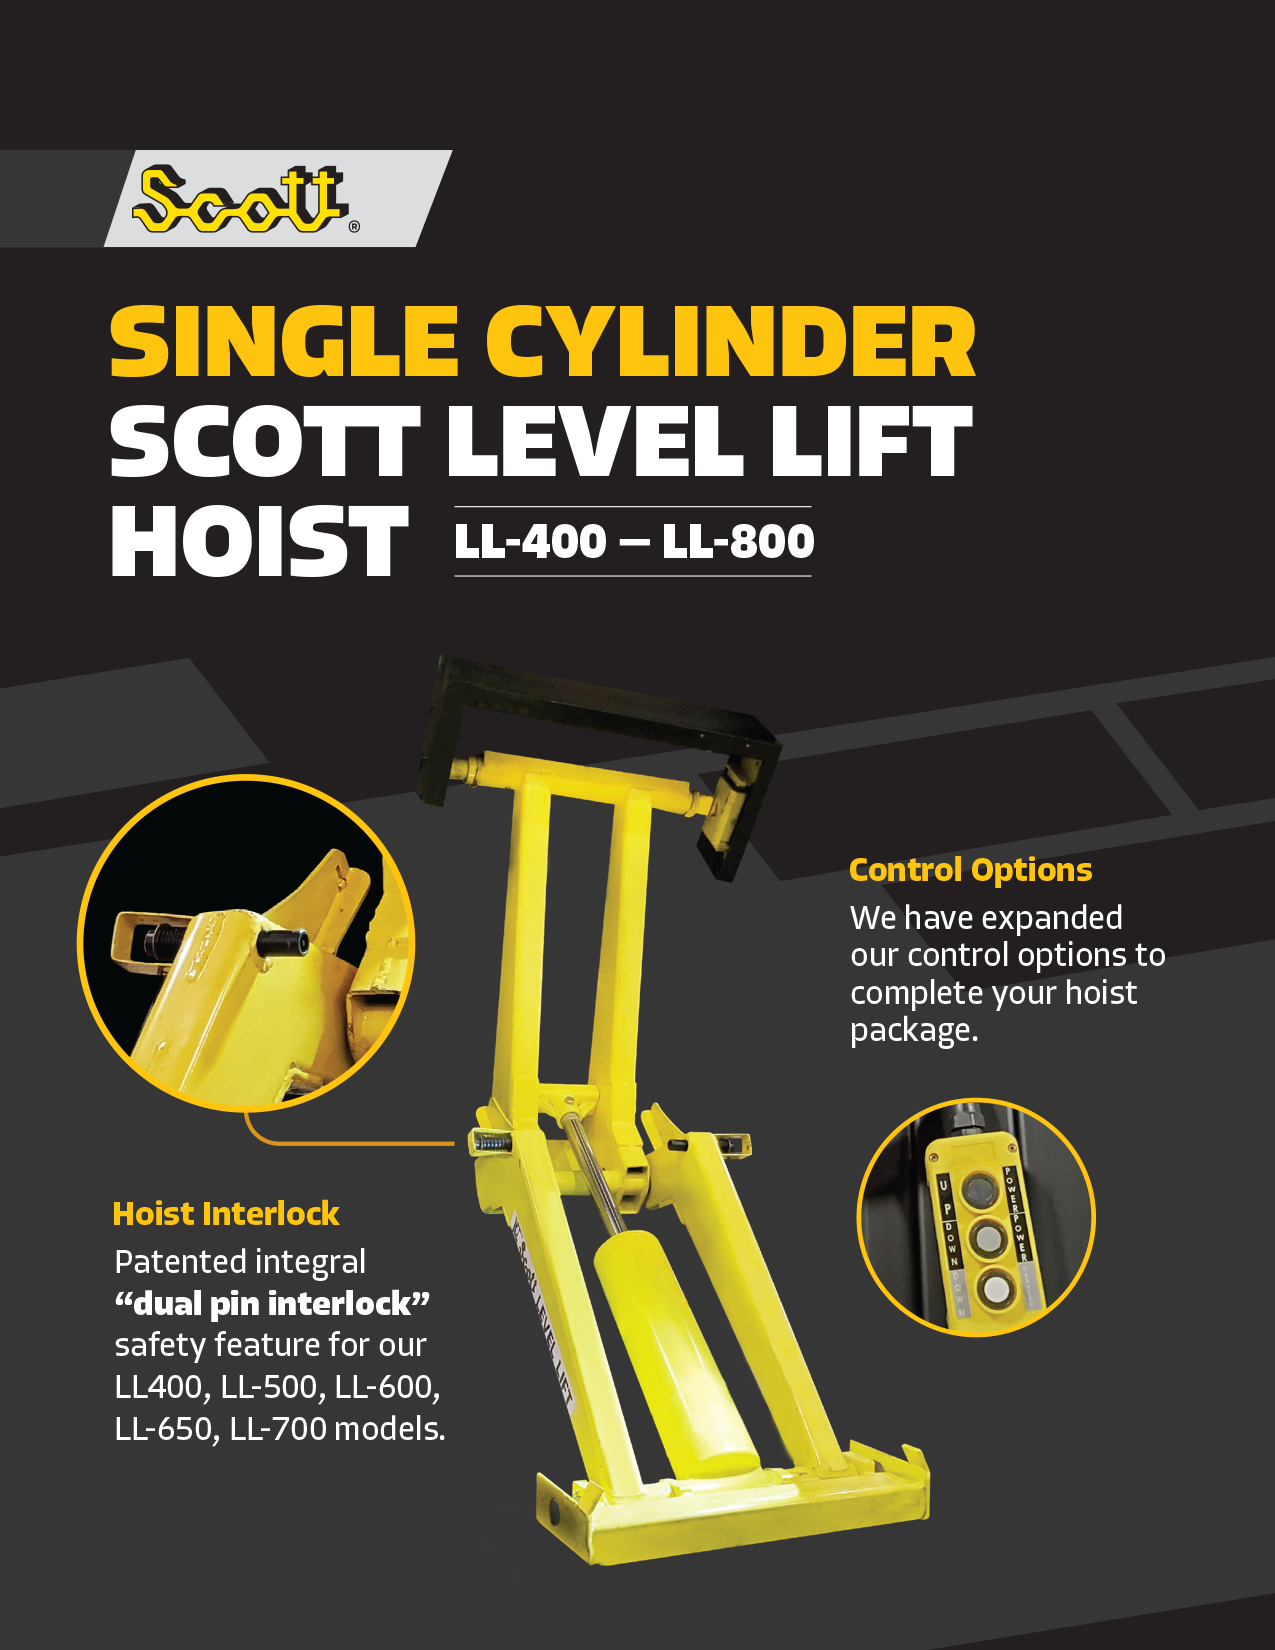 a brochure for a single cylinder scott level lift hoist